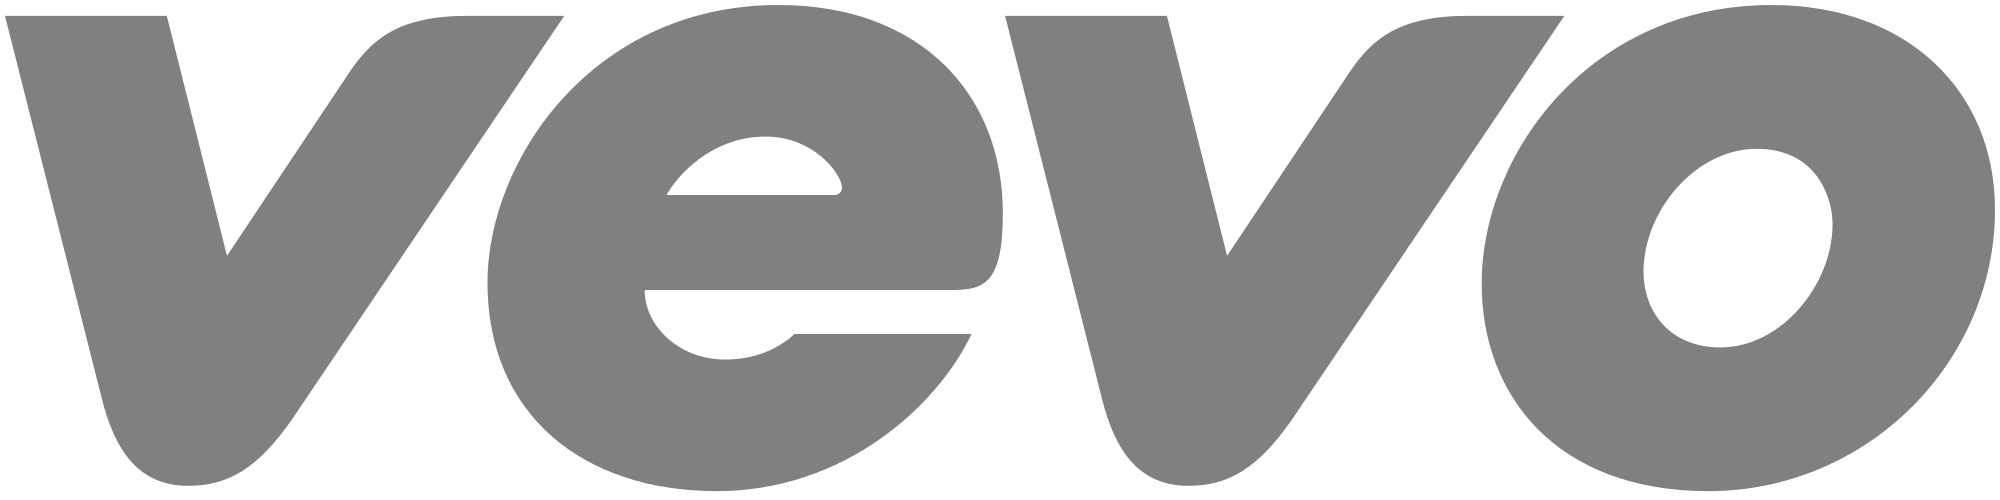 2000px-Vevo_logo.svg.png